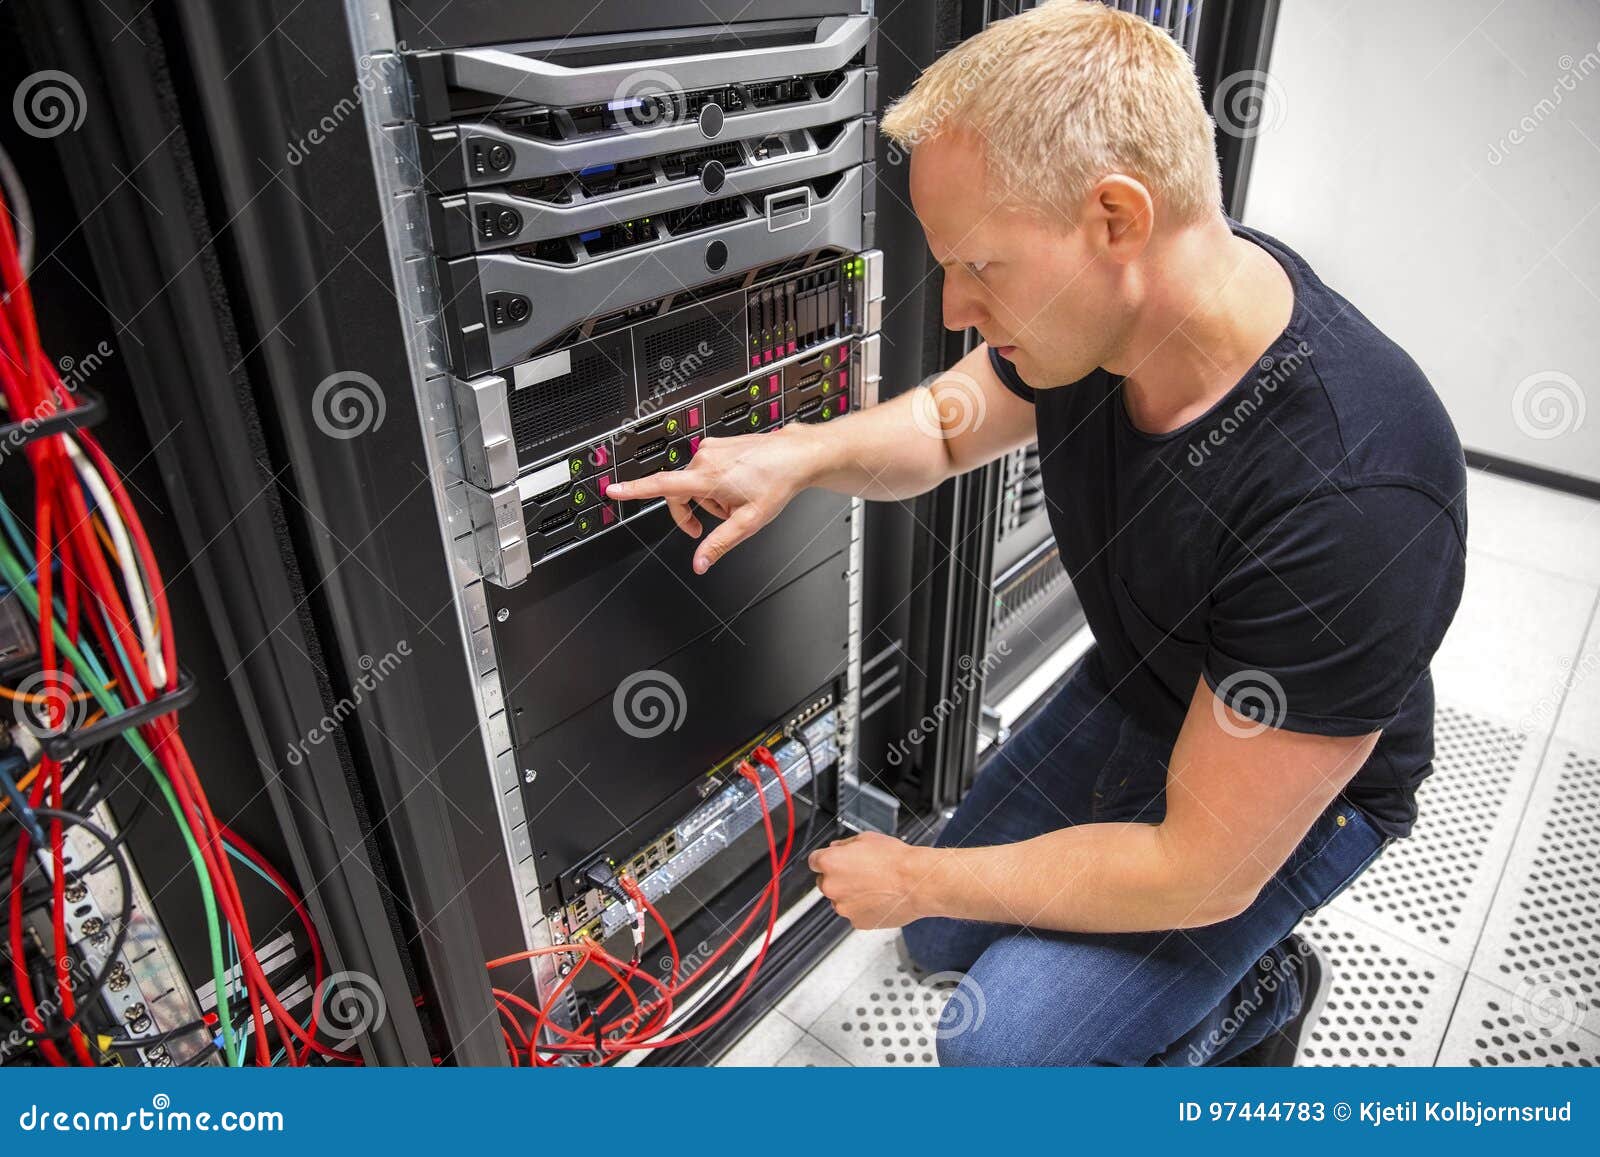 it technician monitors server on rack in datacenter